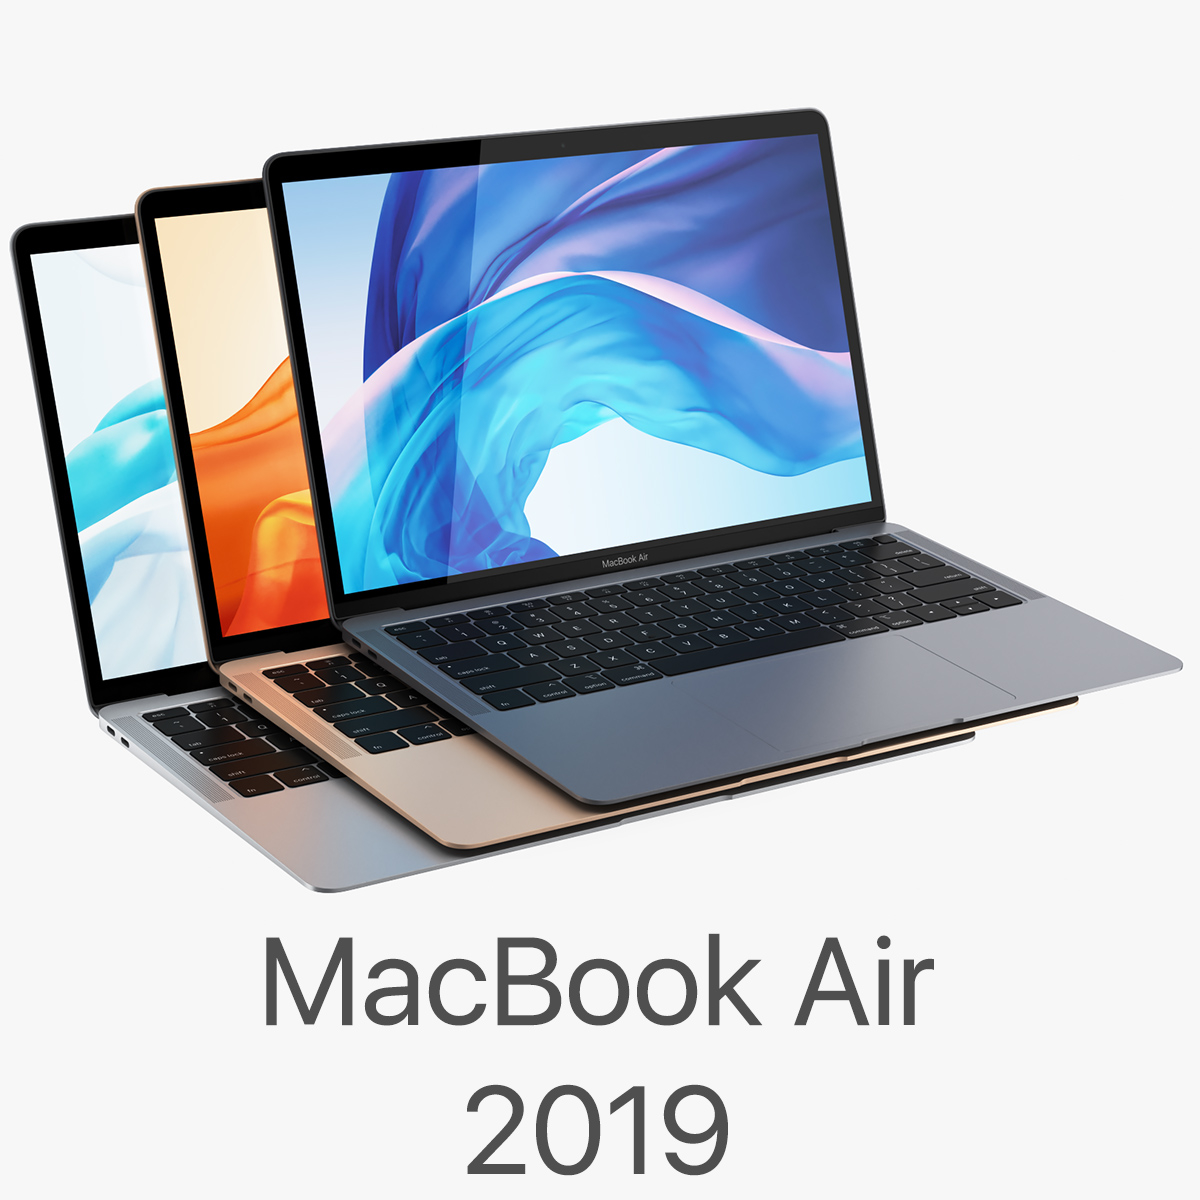 MacBook Air Intel Ci5 1.6GHz Dual-Core 256gb año 2019 sellada con